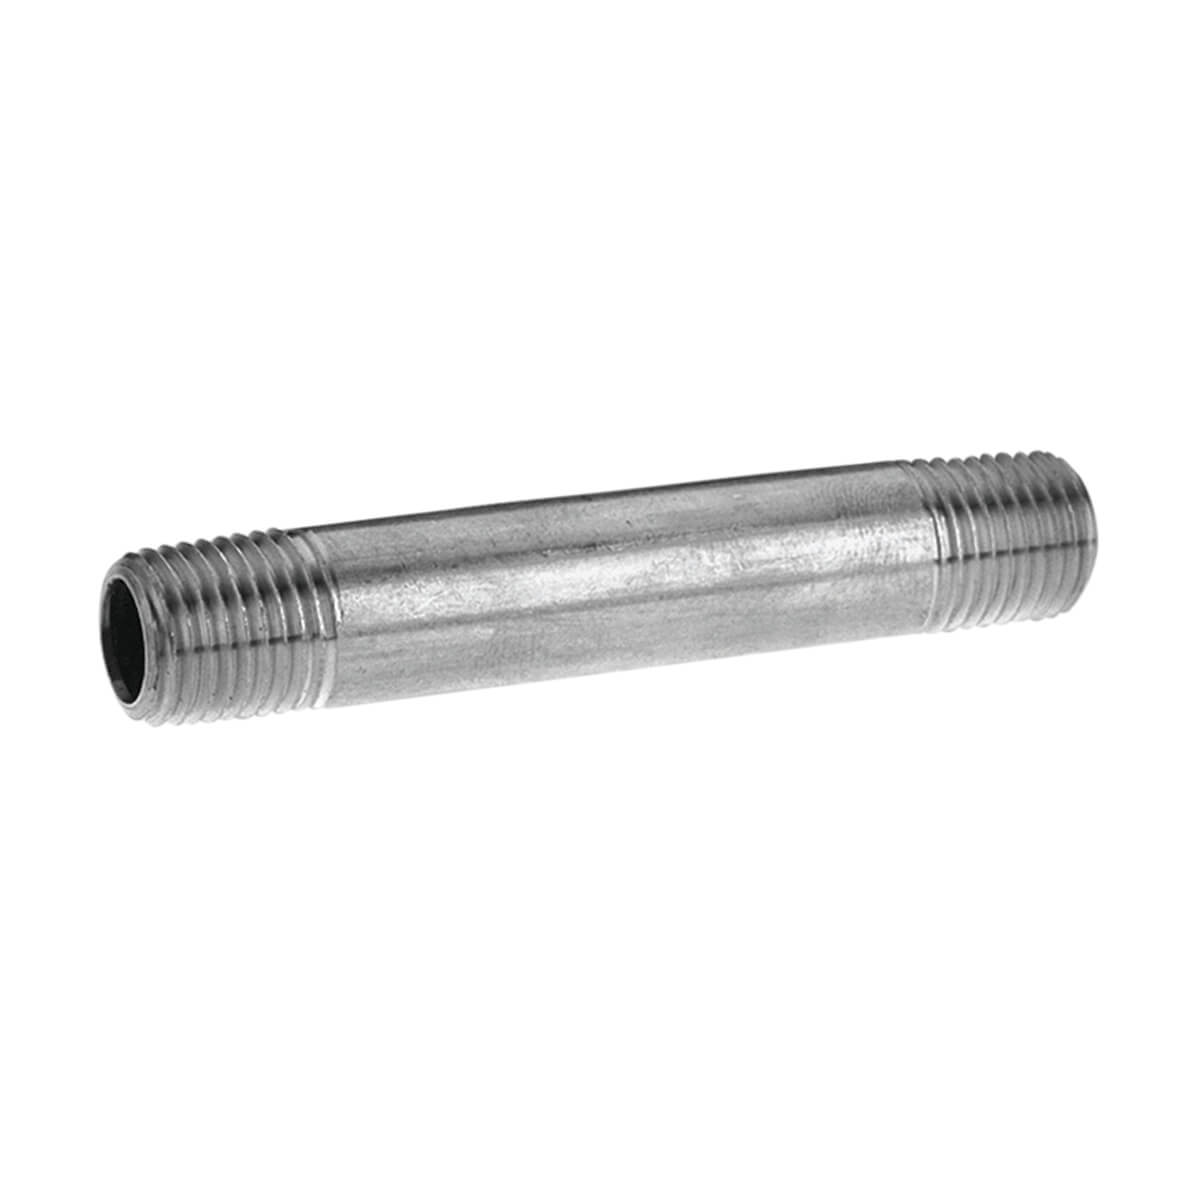 Pipe Nipple Galvanized Steel - 1/2-in x 4-in